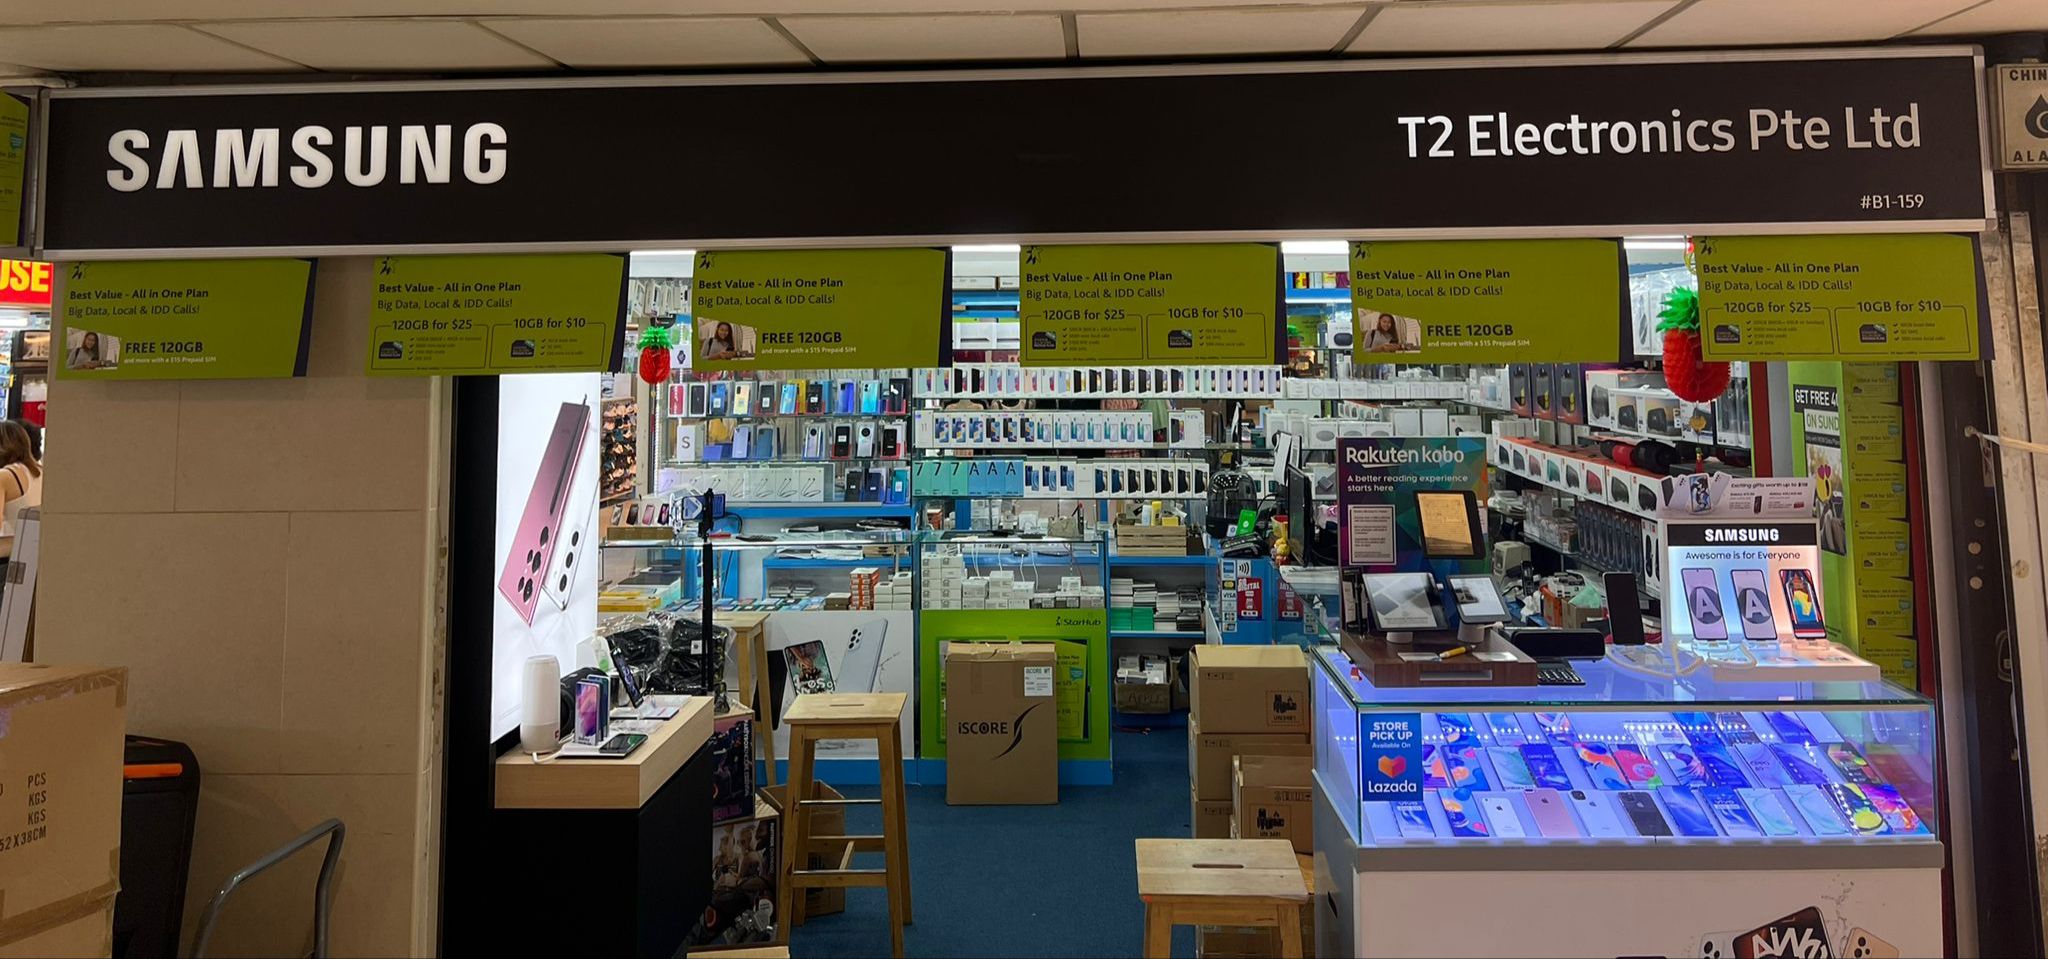 T2 Electronics Pte Ltd